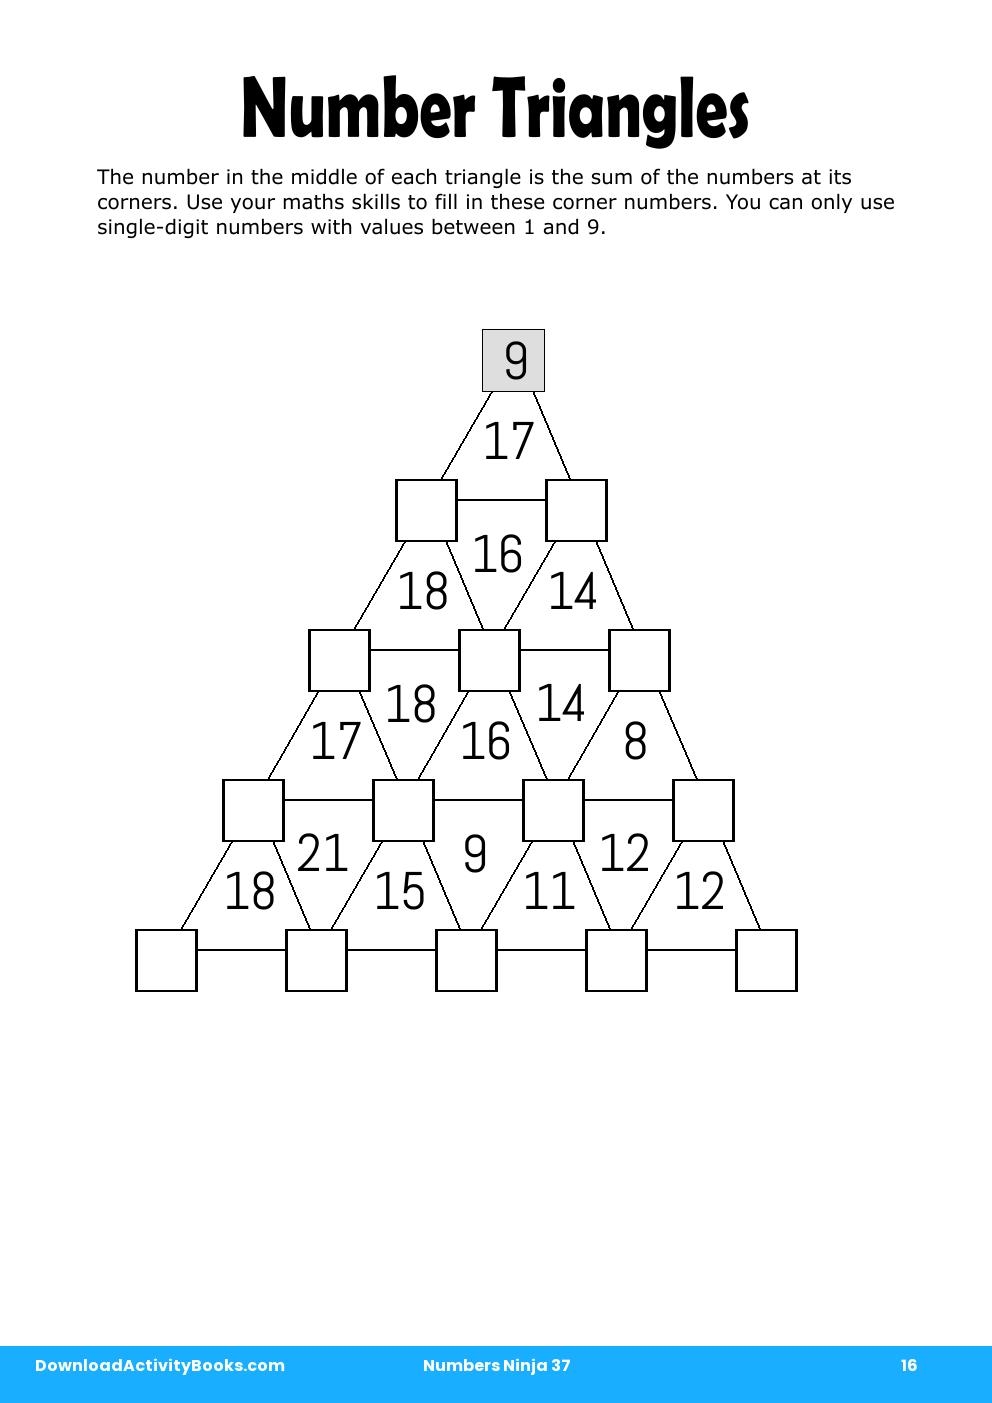 Number Triangles in Numbers Ninja 37